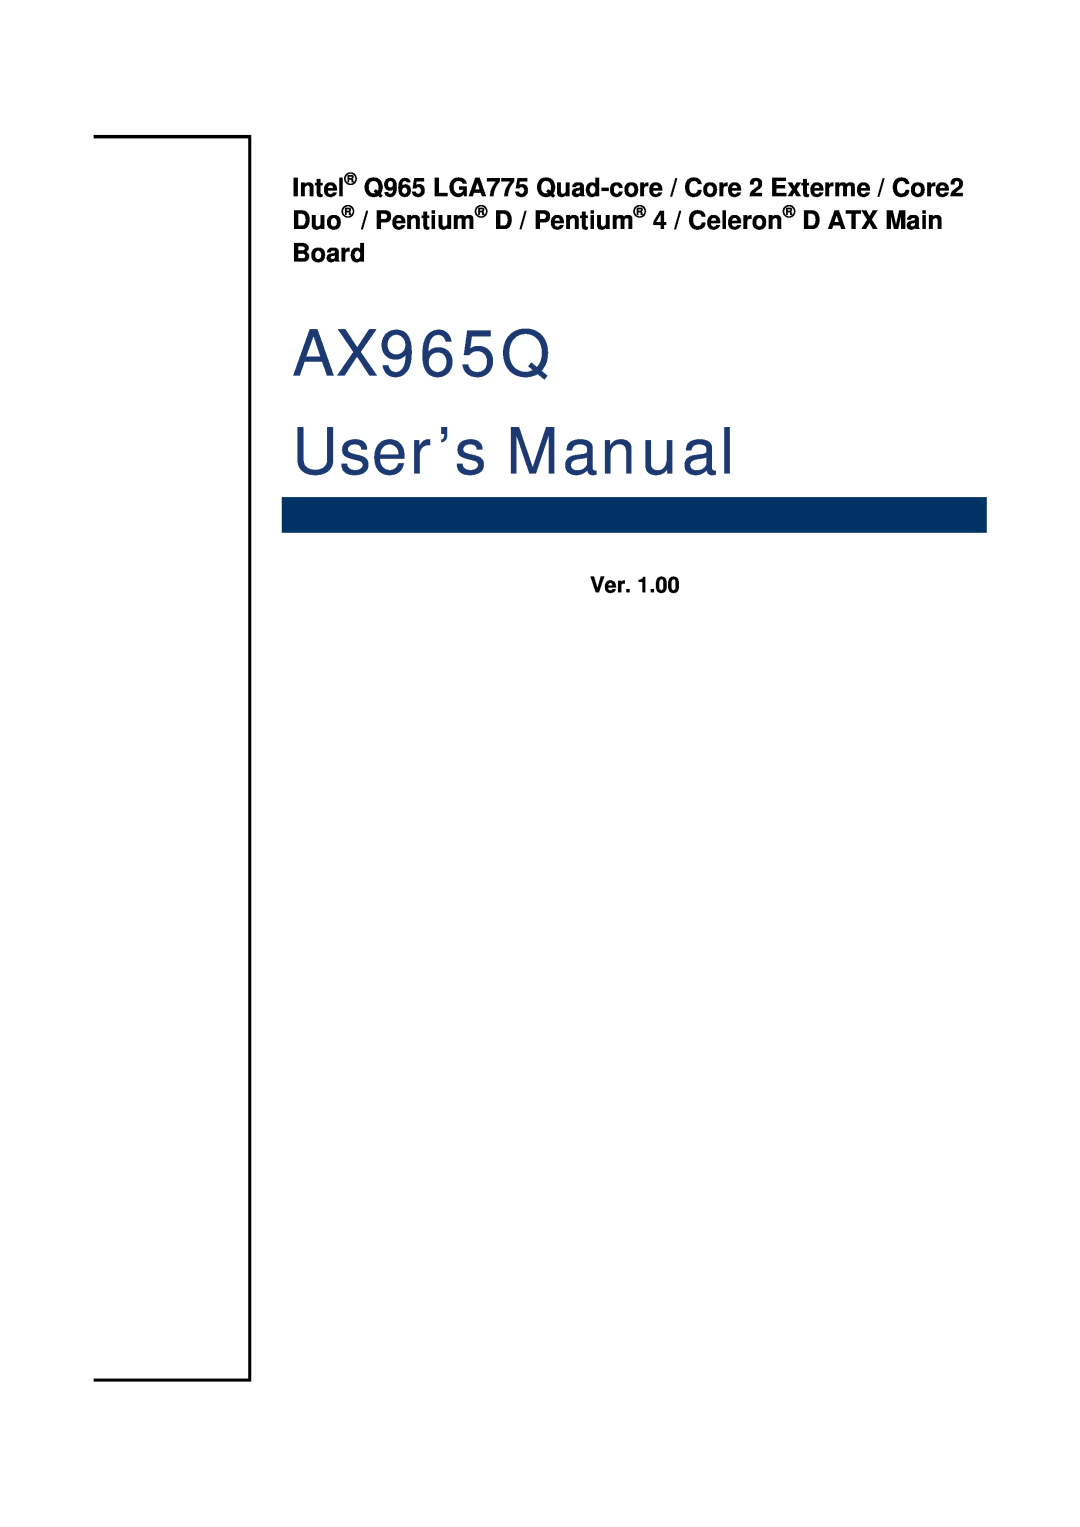 Intel user manual AX965Q User’s Manual 